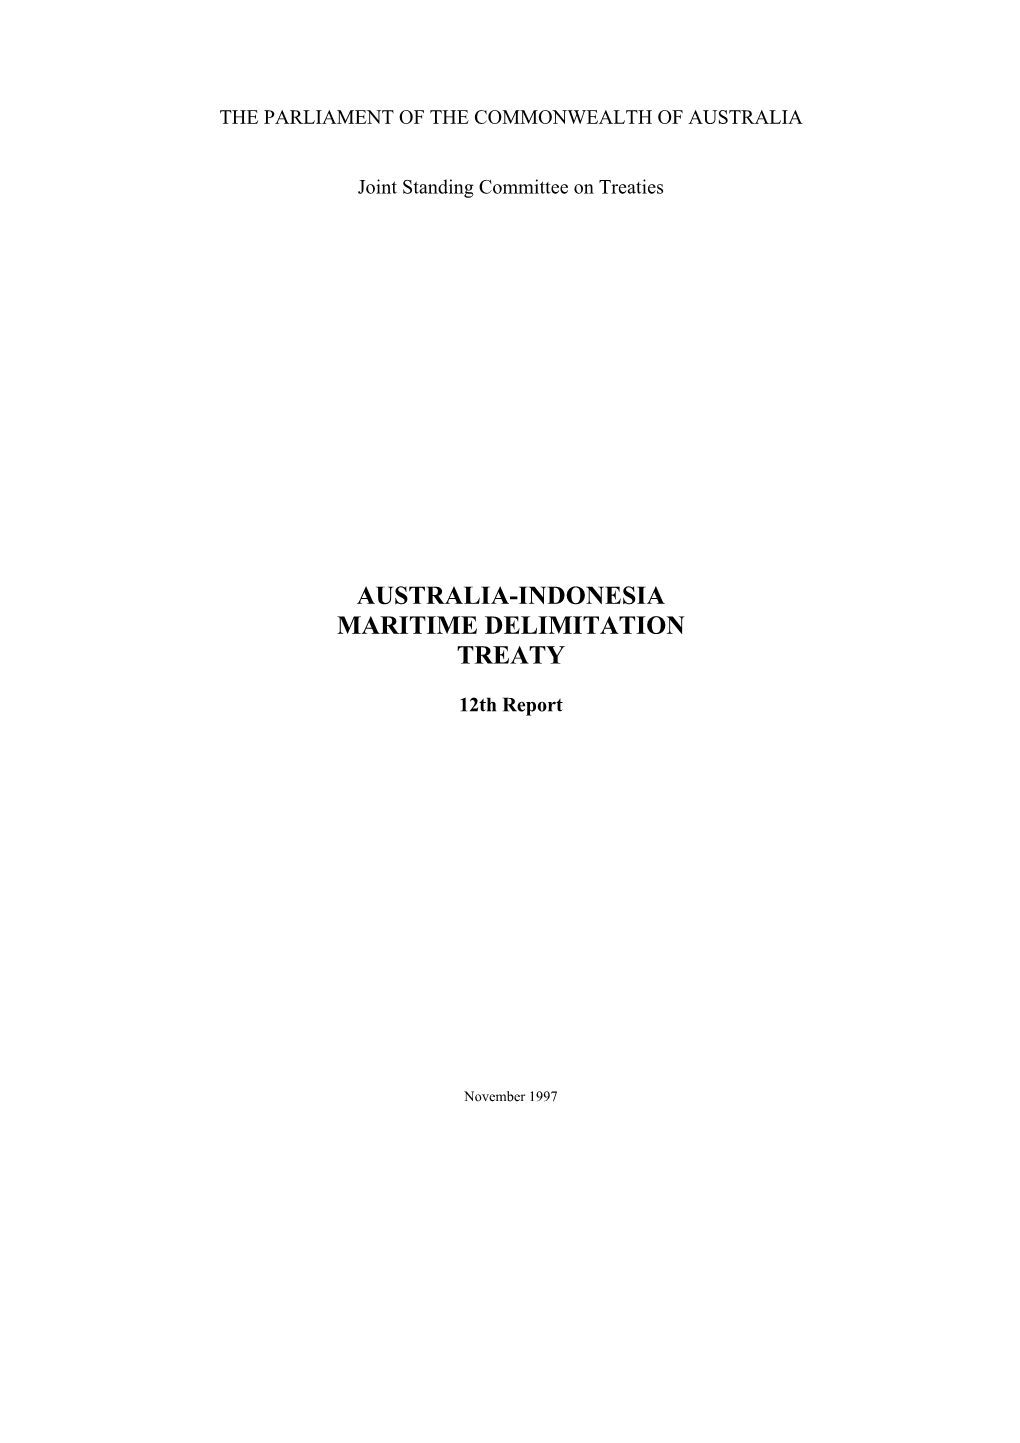 Australia-Indonesia Maritime Delimitation Treaty